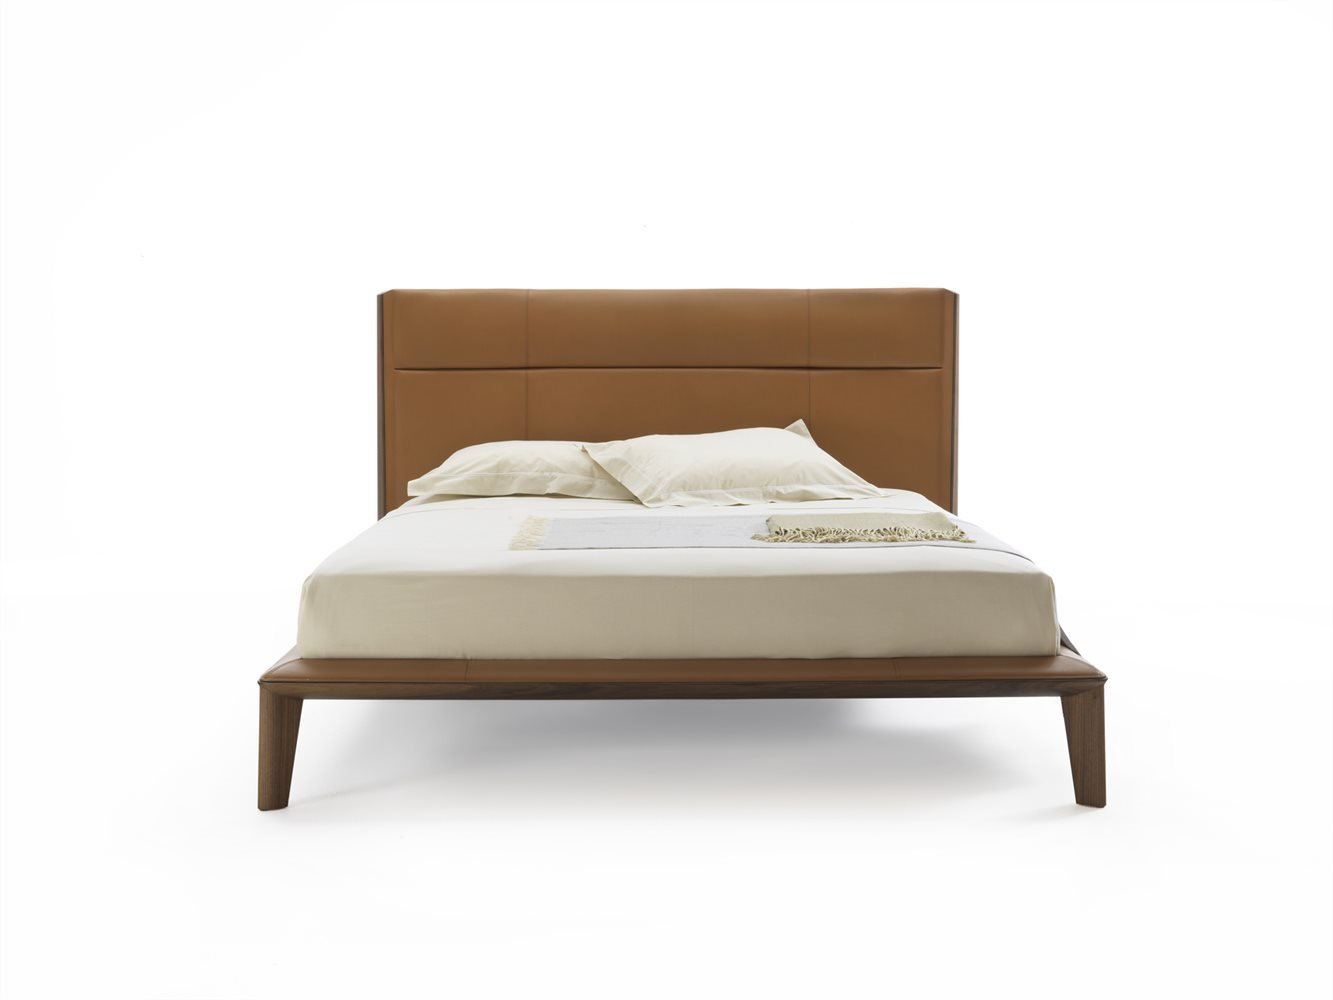 Nyan Bed from Porada, designed by Gabriele & Oscar Buratti